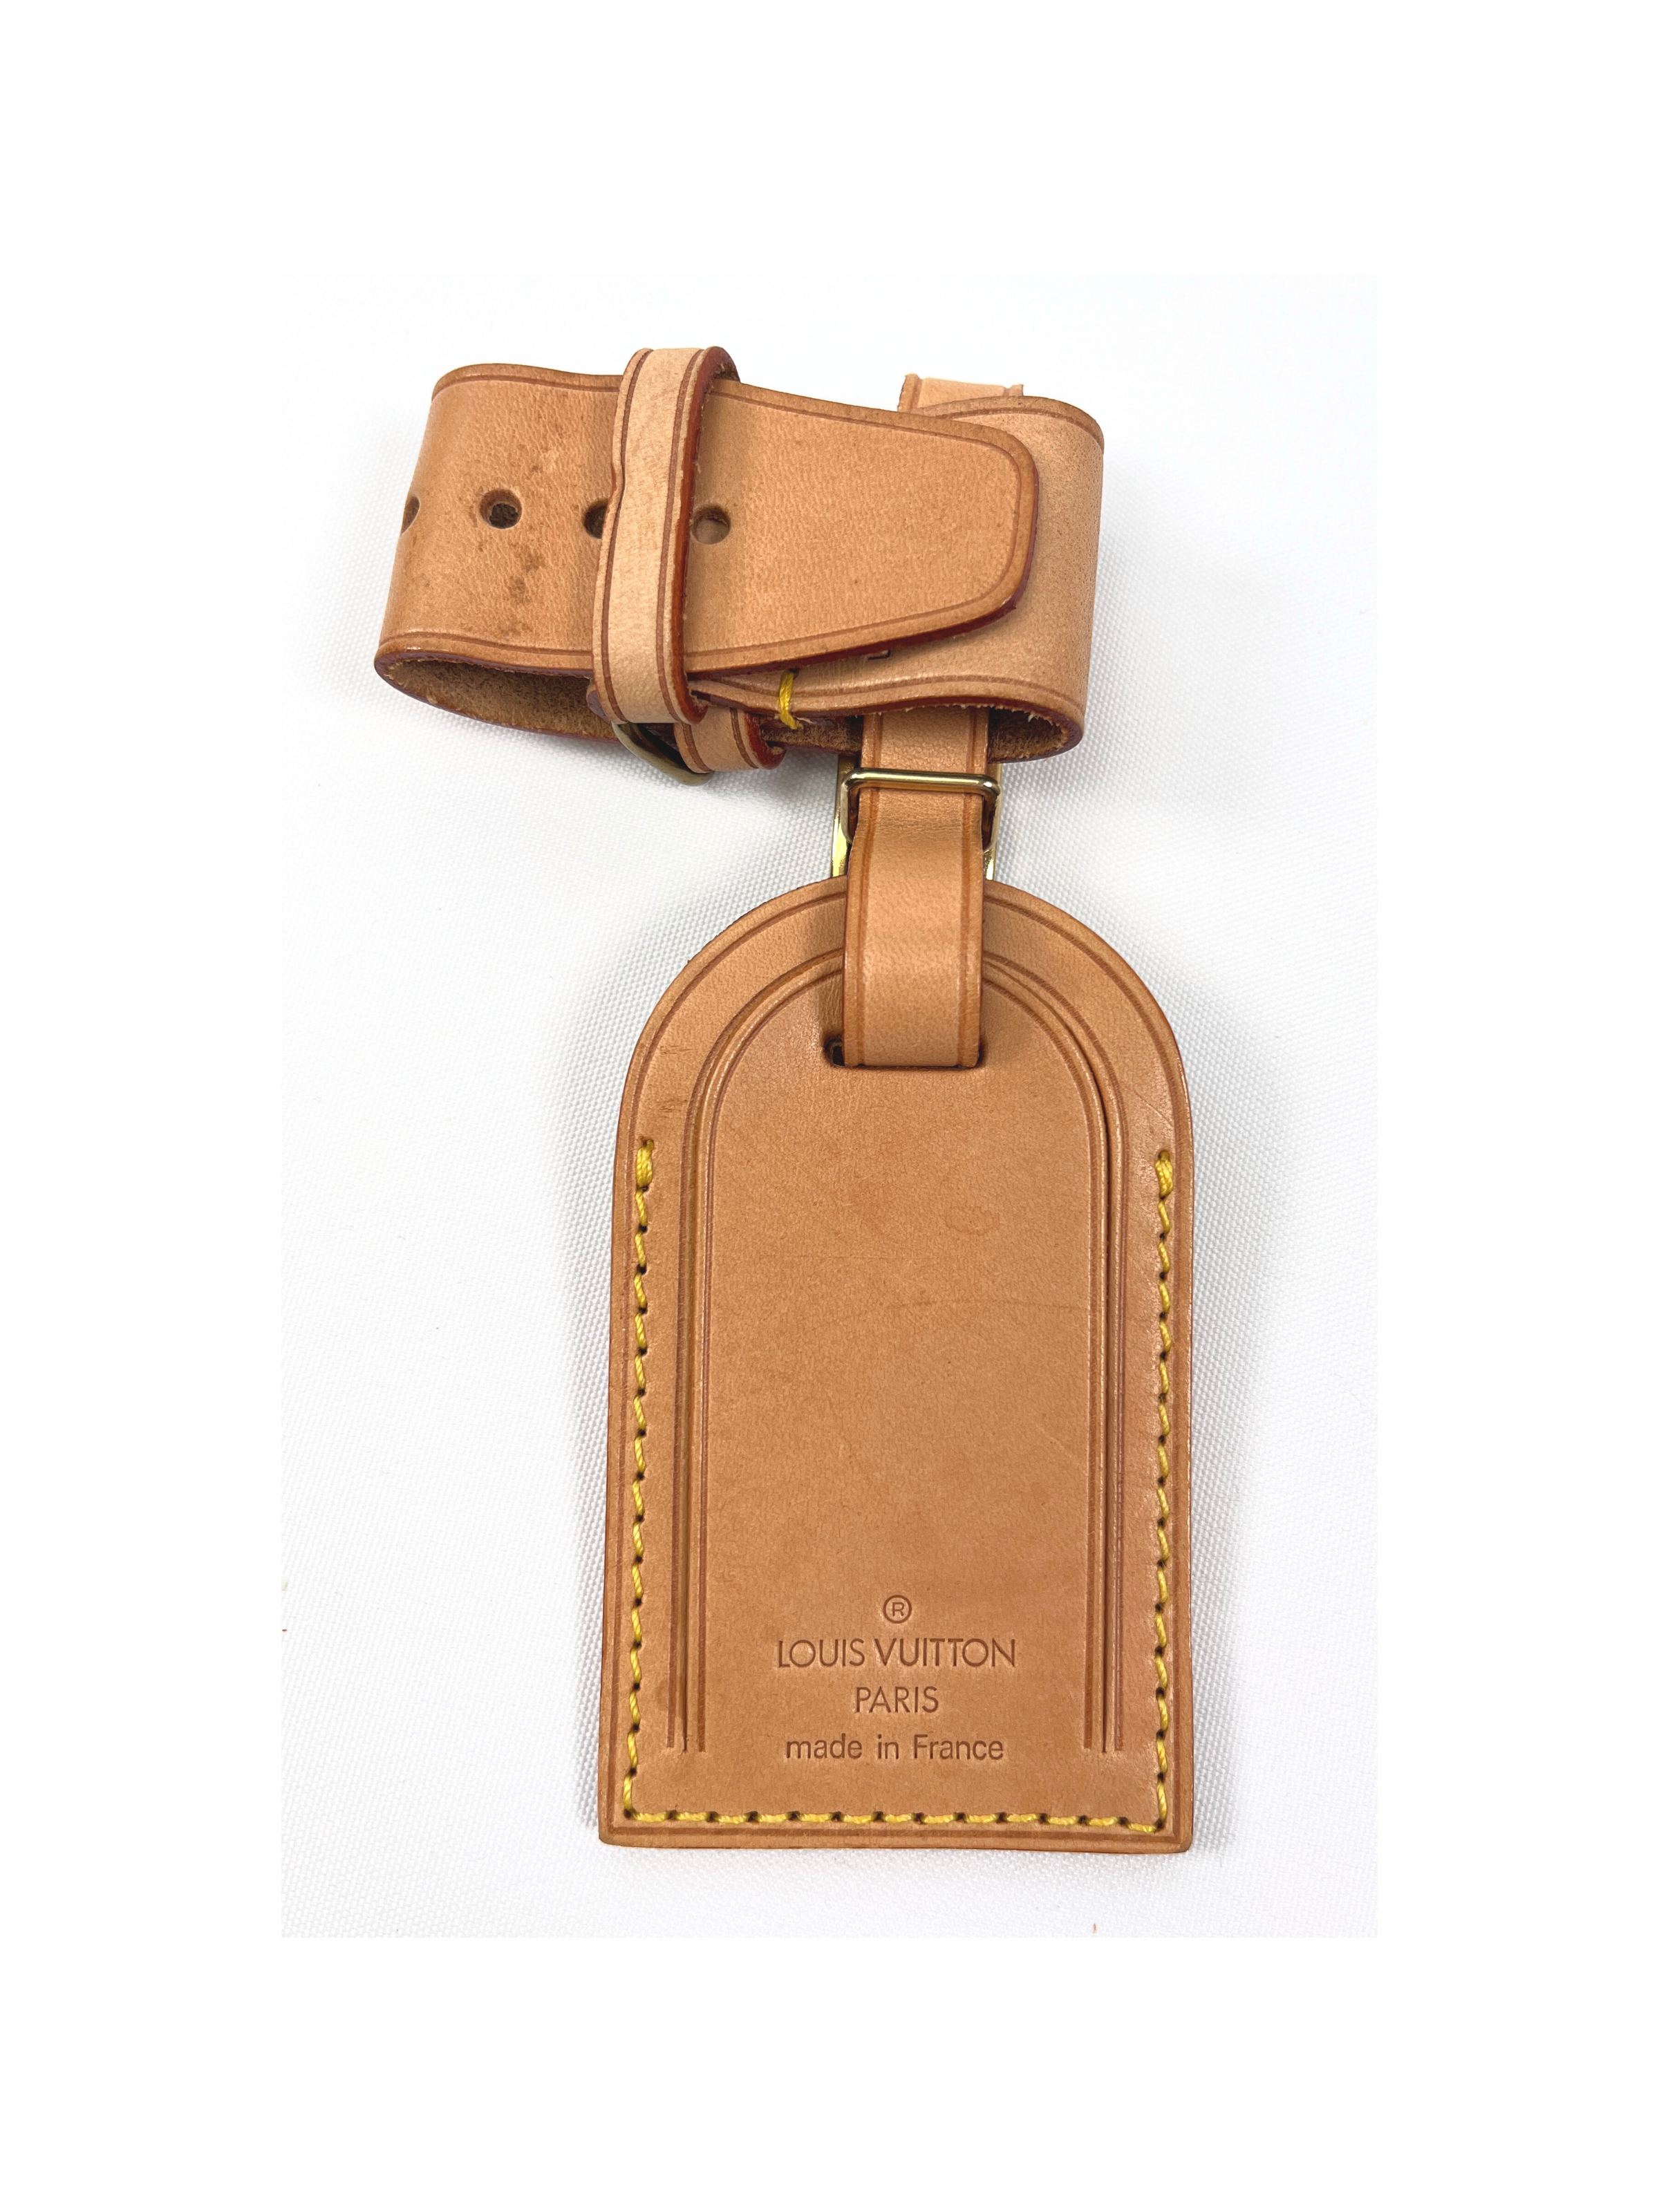 Louis Vuitton Vachetta Leather Luggage Tag and Poignet 152lvs25